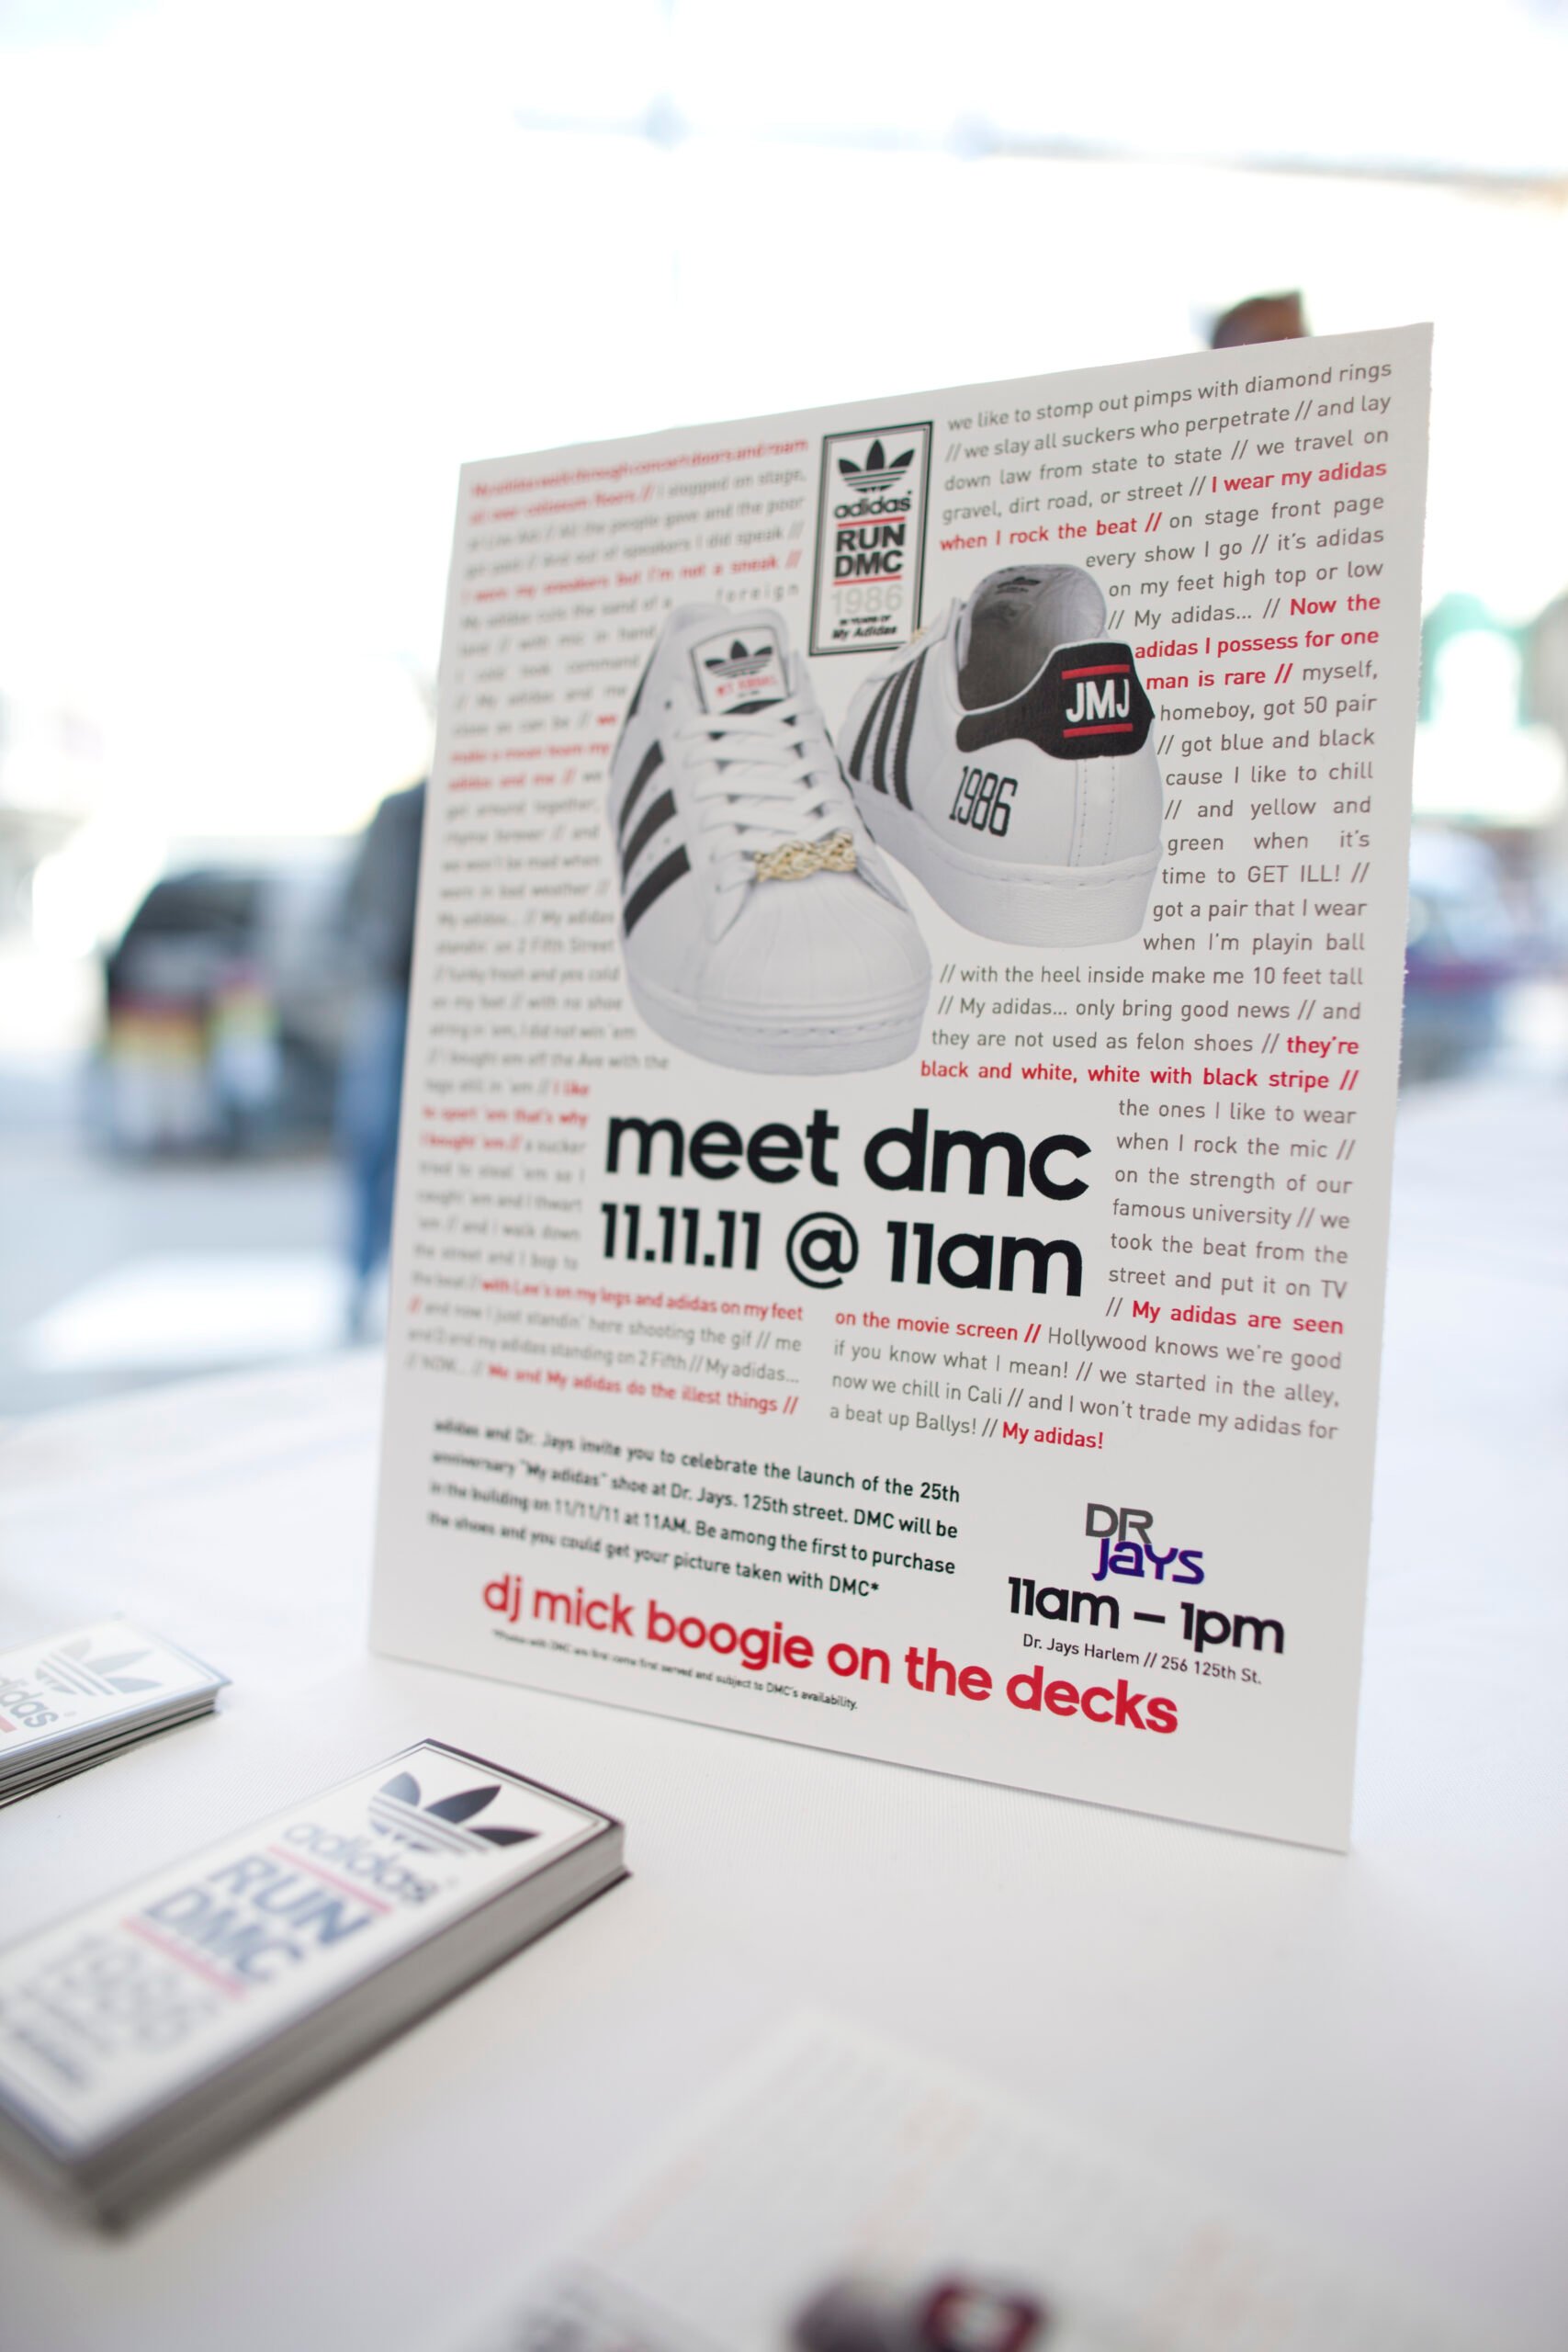 DMC ‘My adidas’ 25th Anniversary Superstar Launch Events Recap